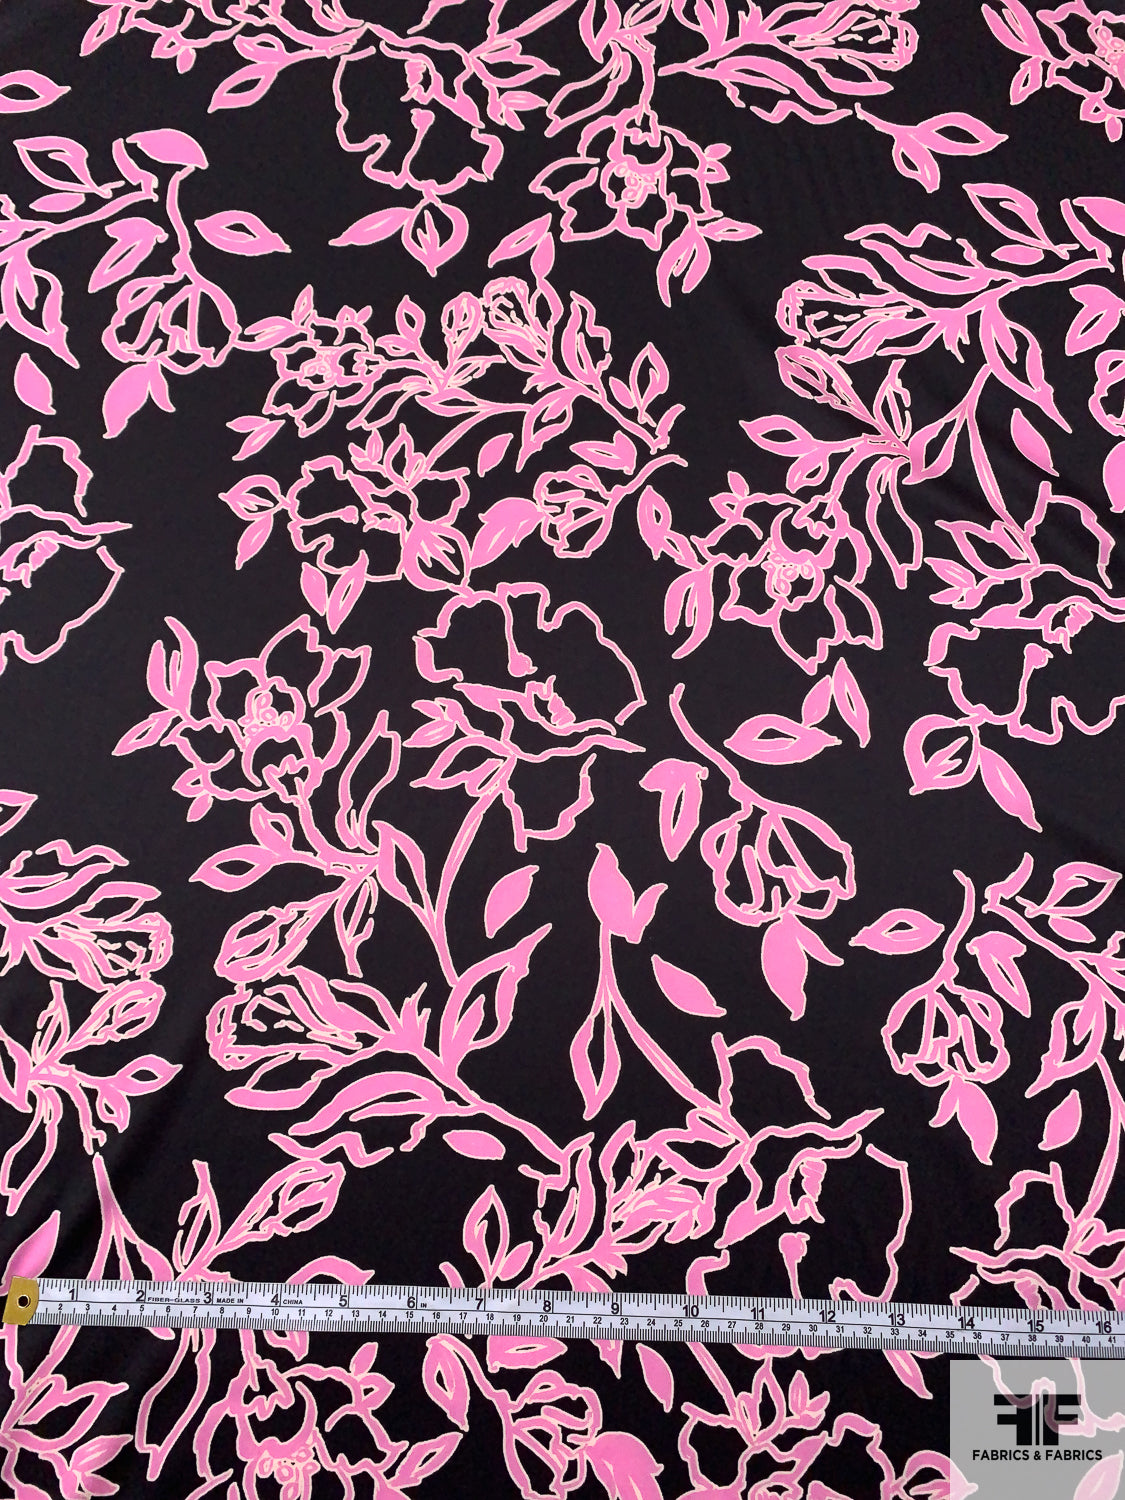 Sketch Floral Printed Polyester Charmeuse - Bubblegum Pink / Black / Cream